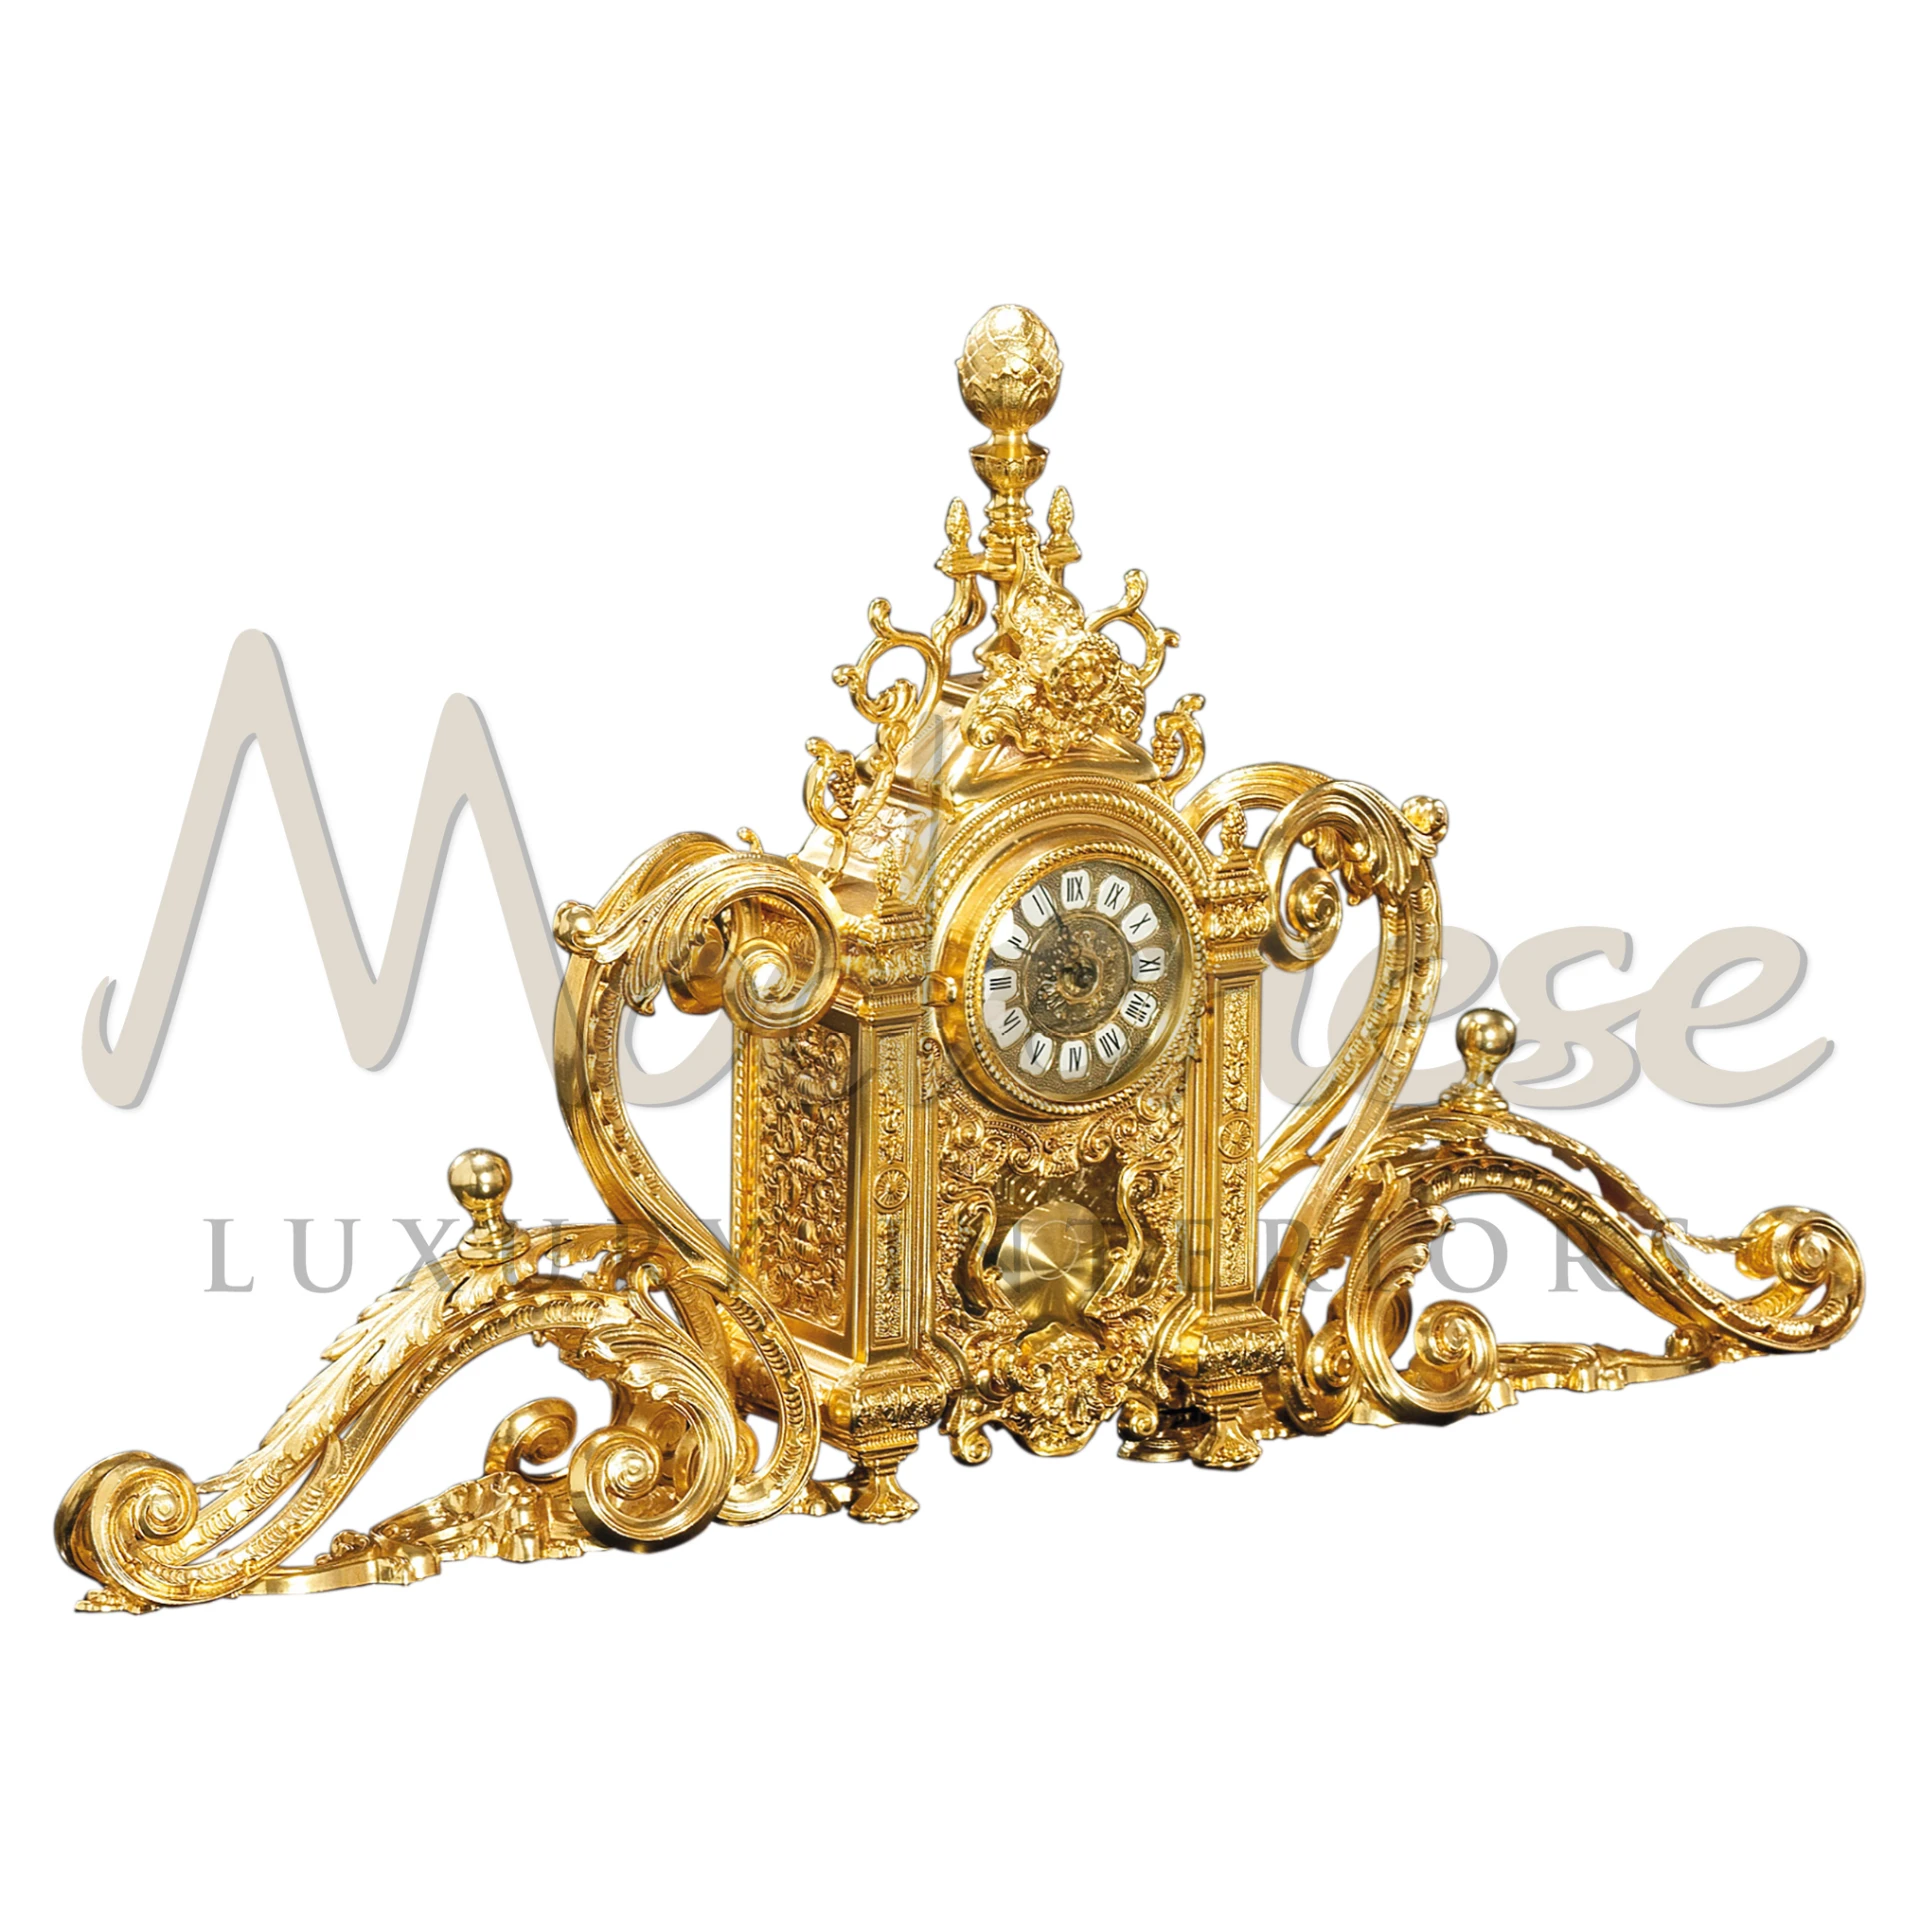 Luxe Clockpiece with gold finish, a luxury Italian pendulum clock by Modenese
